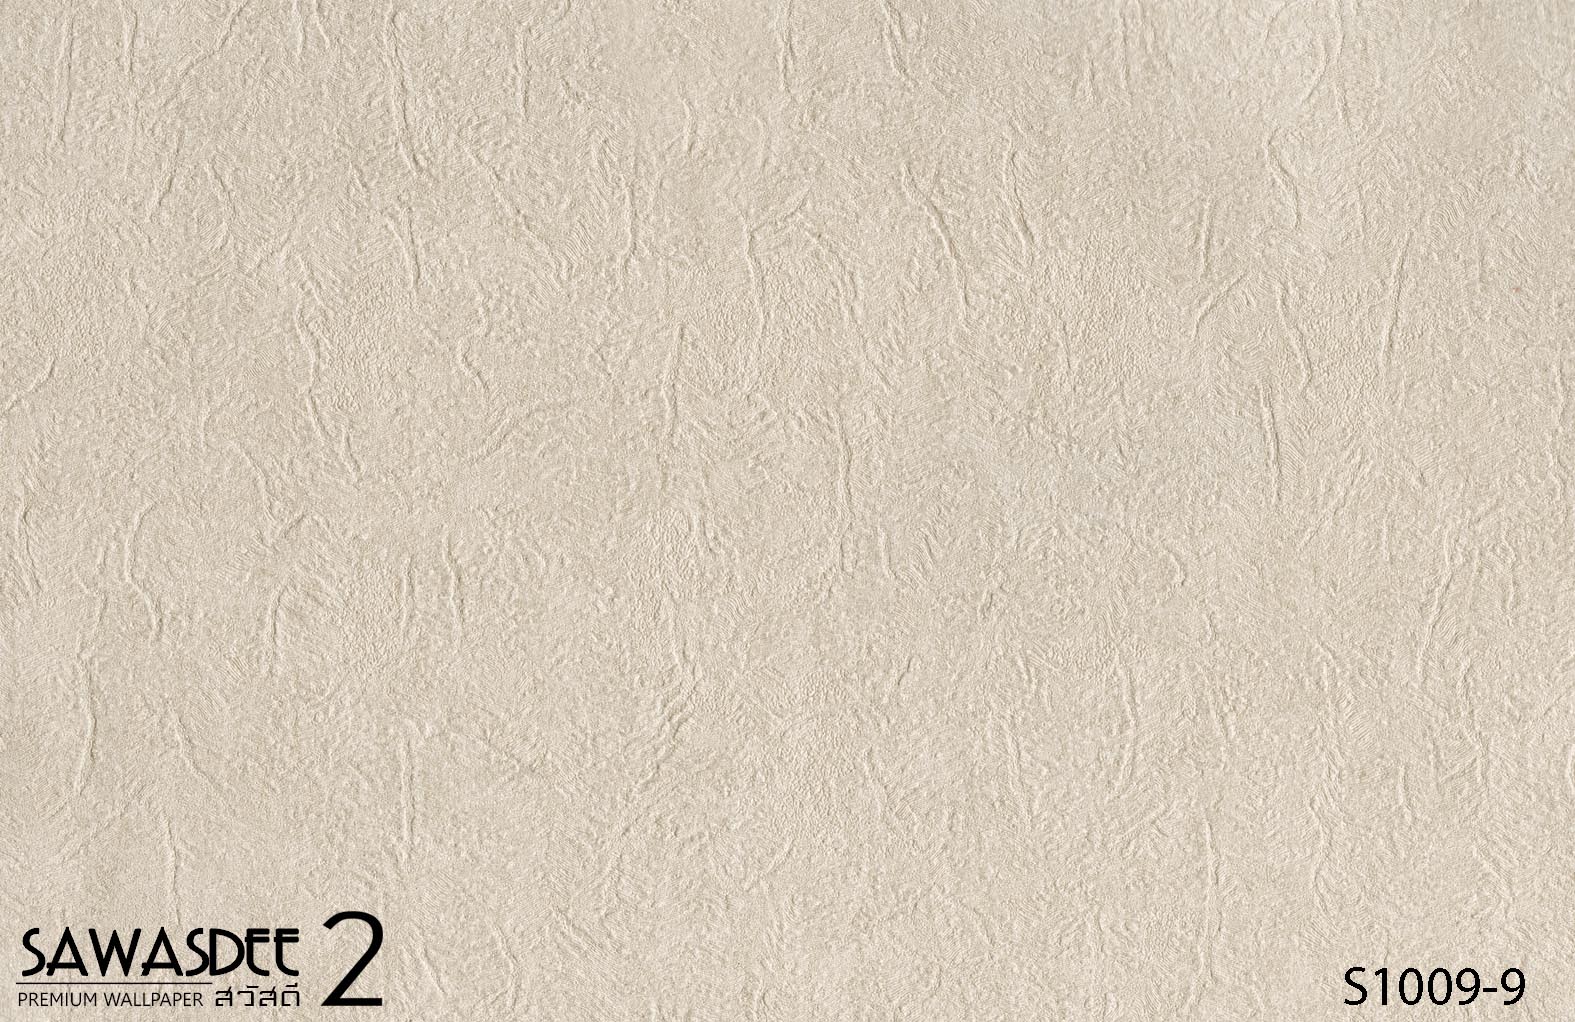 Wallpaper (SAWASDEE 2) S1009-9